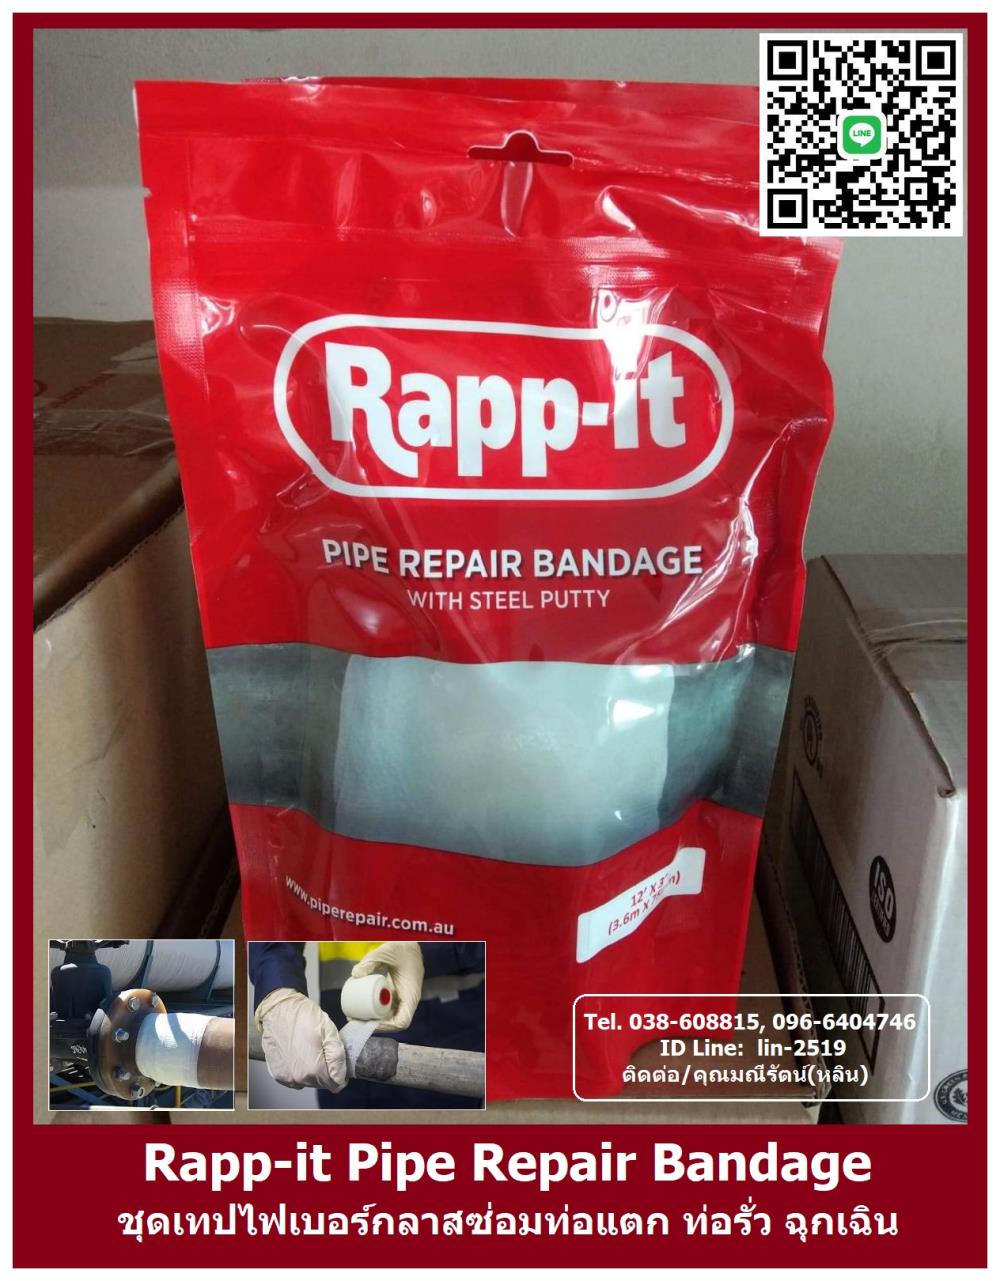 RAPP-IT วัสดุซ่อมท่อฉุกเฉิน ซ่อมท่อที่แตกร้าว ท่อรั่วซึม ทนแรงดันน้ำสูง